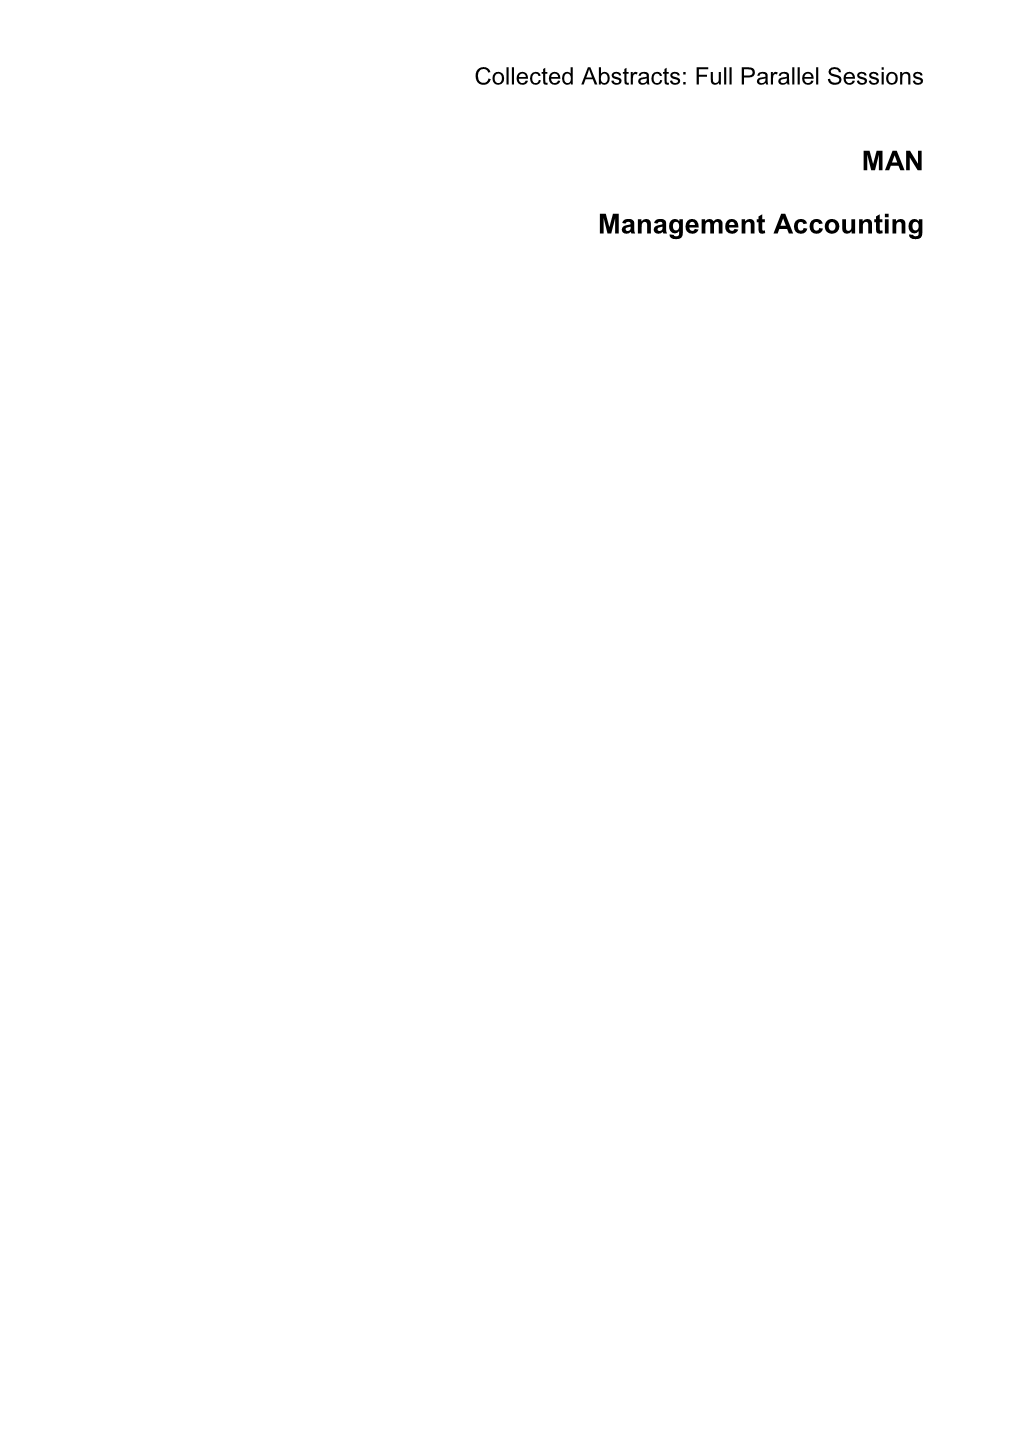 MAN Management Accounting